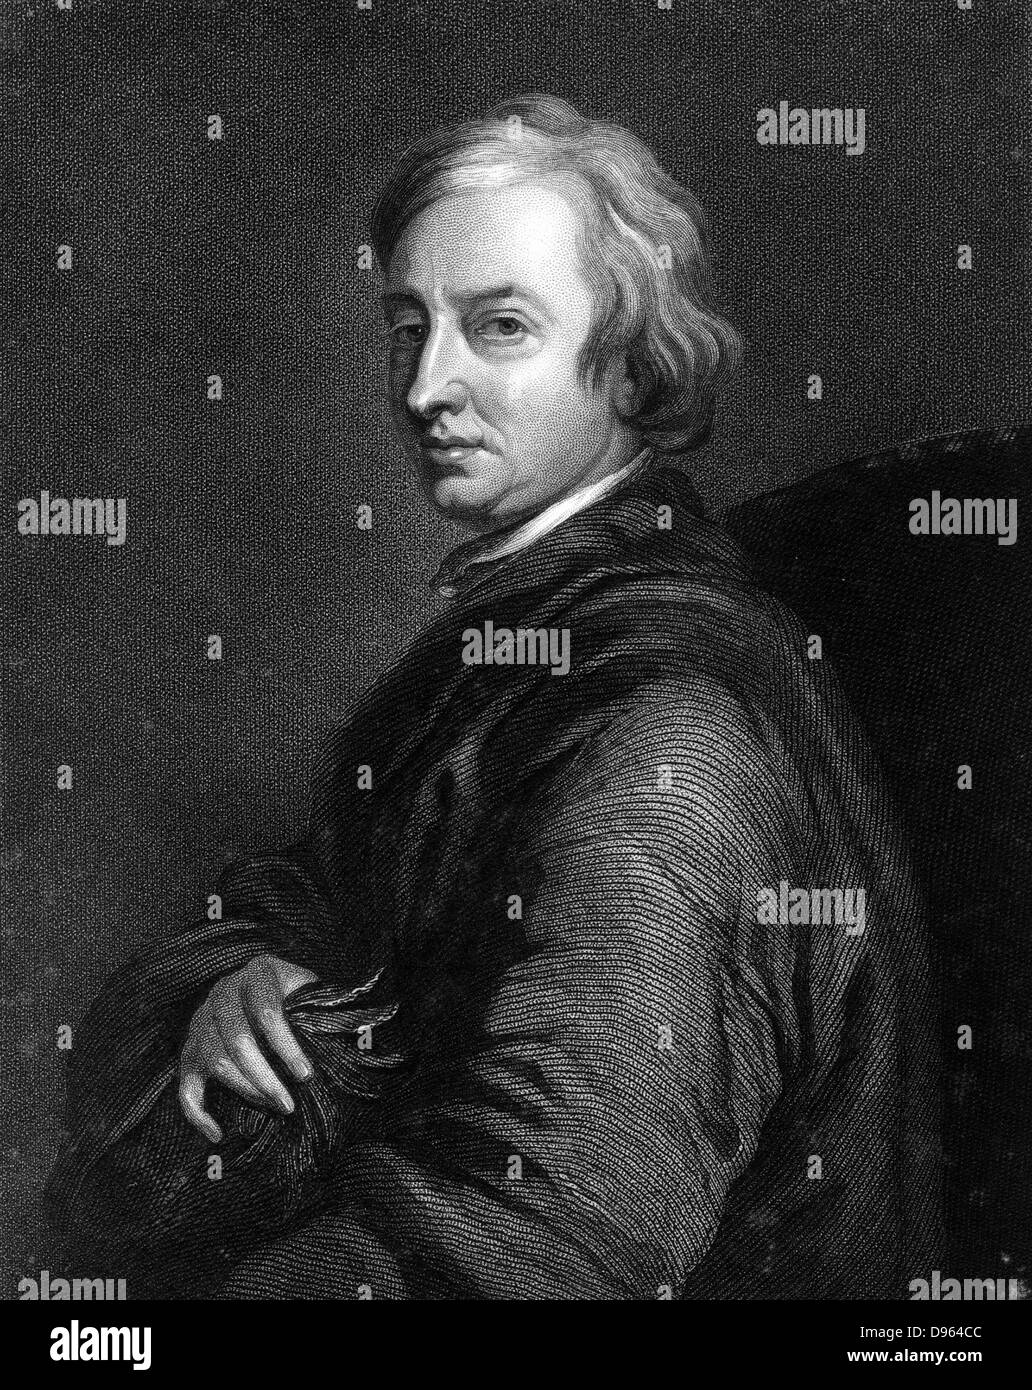 John Dryden (1631-1700), poeta inglés. Poeta laureado de 1668. Después del retrato grabado por Thomas Hudson (1701-1779). Foto de stock